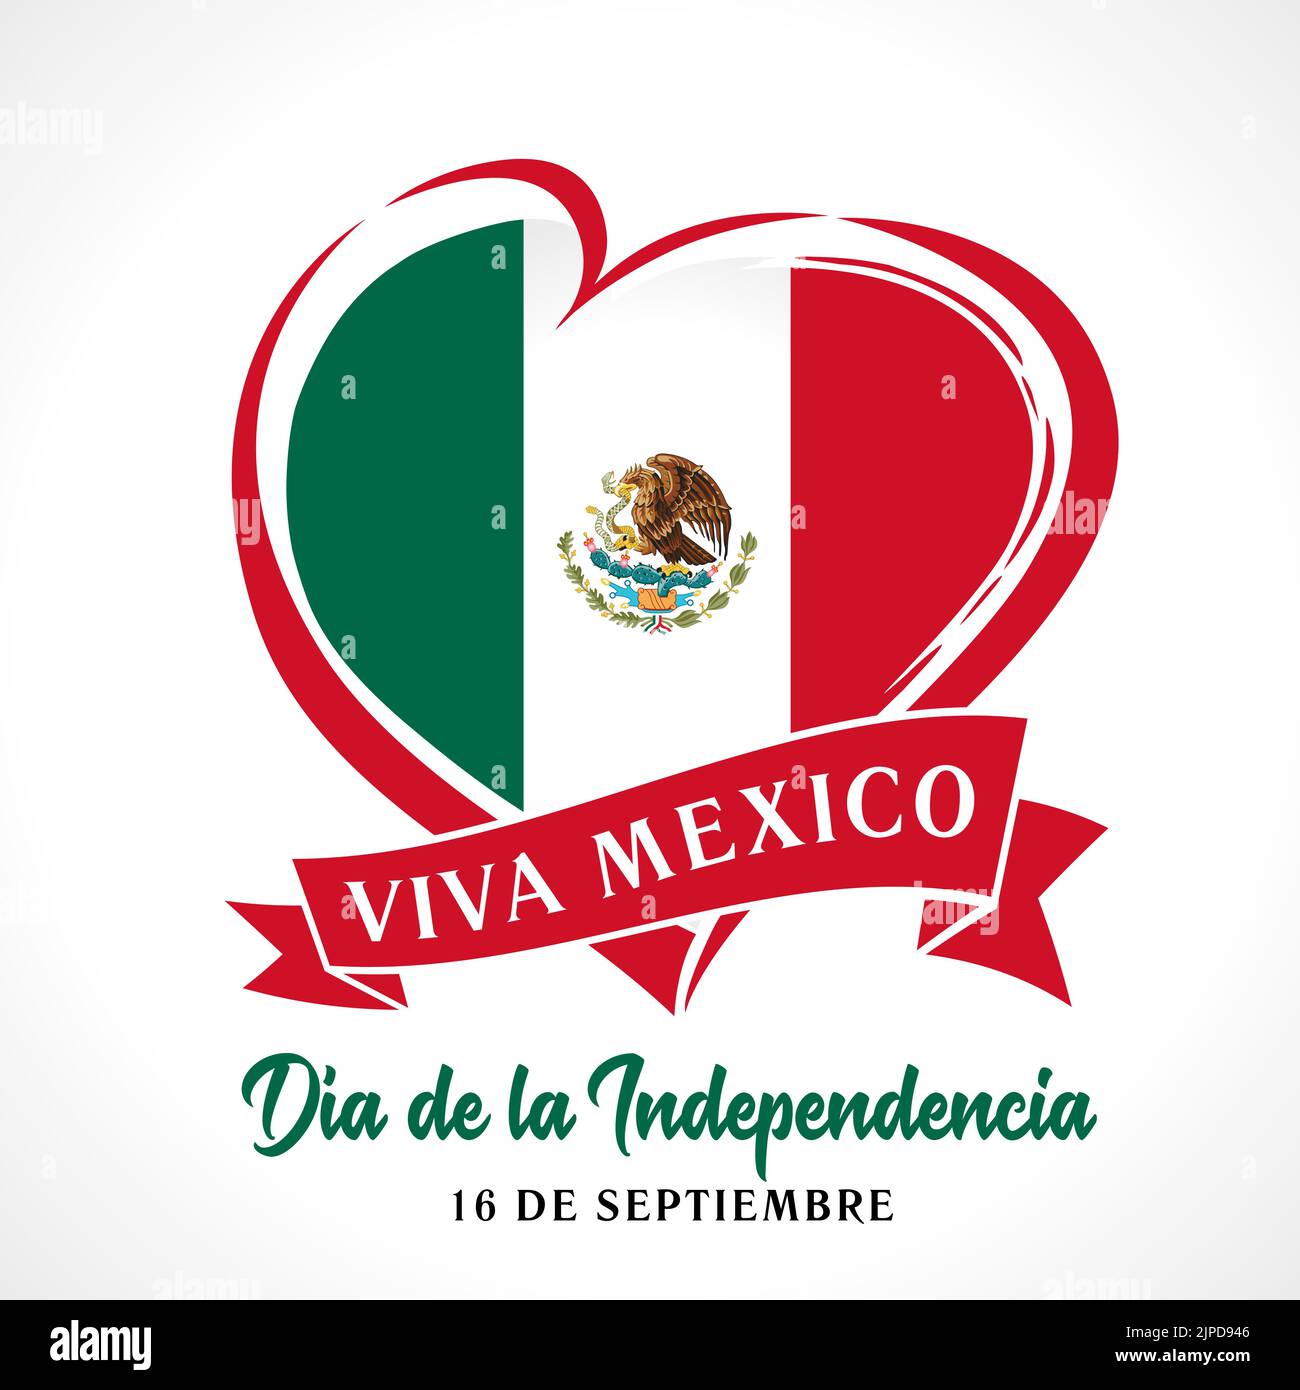 Viva Mexico, Banner Día de la Independencia. Übersetzung: Unabhängigkeitstag 16. September Feier in den Vereinigten Mexikanischen Staaten. Merker im Herzvektor Stock Vektor